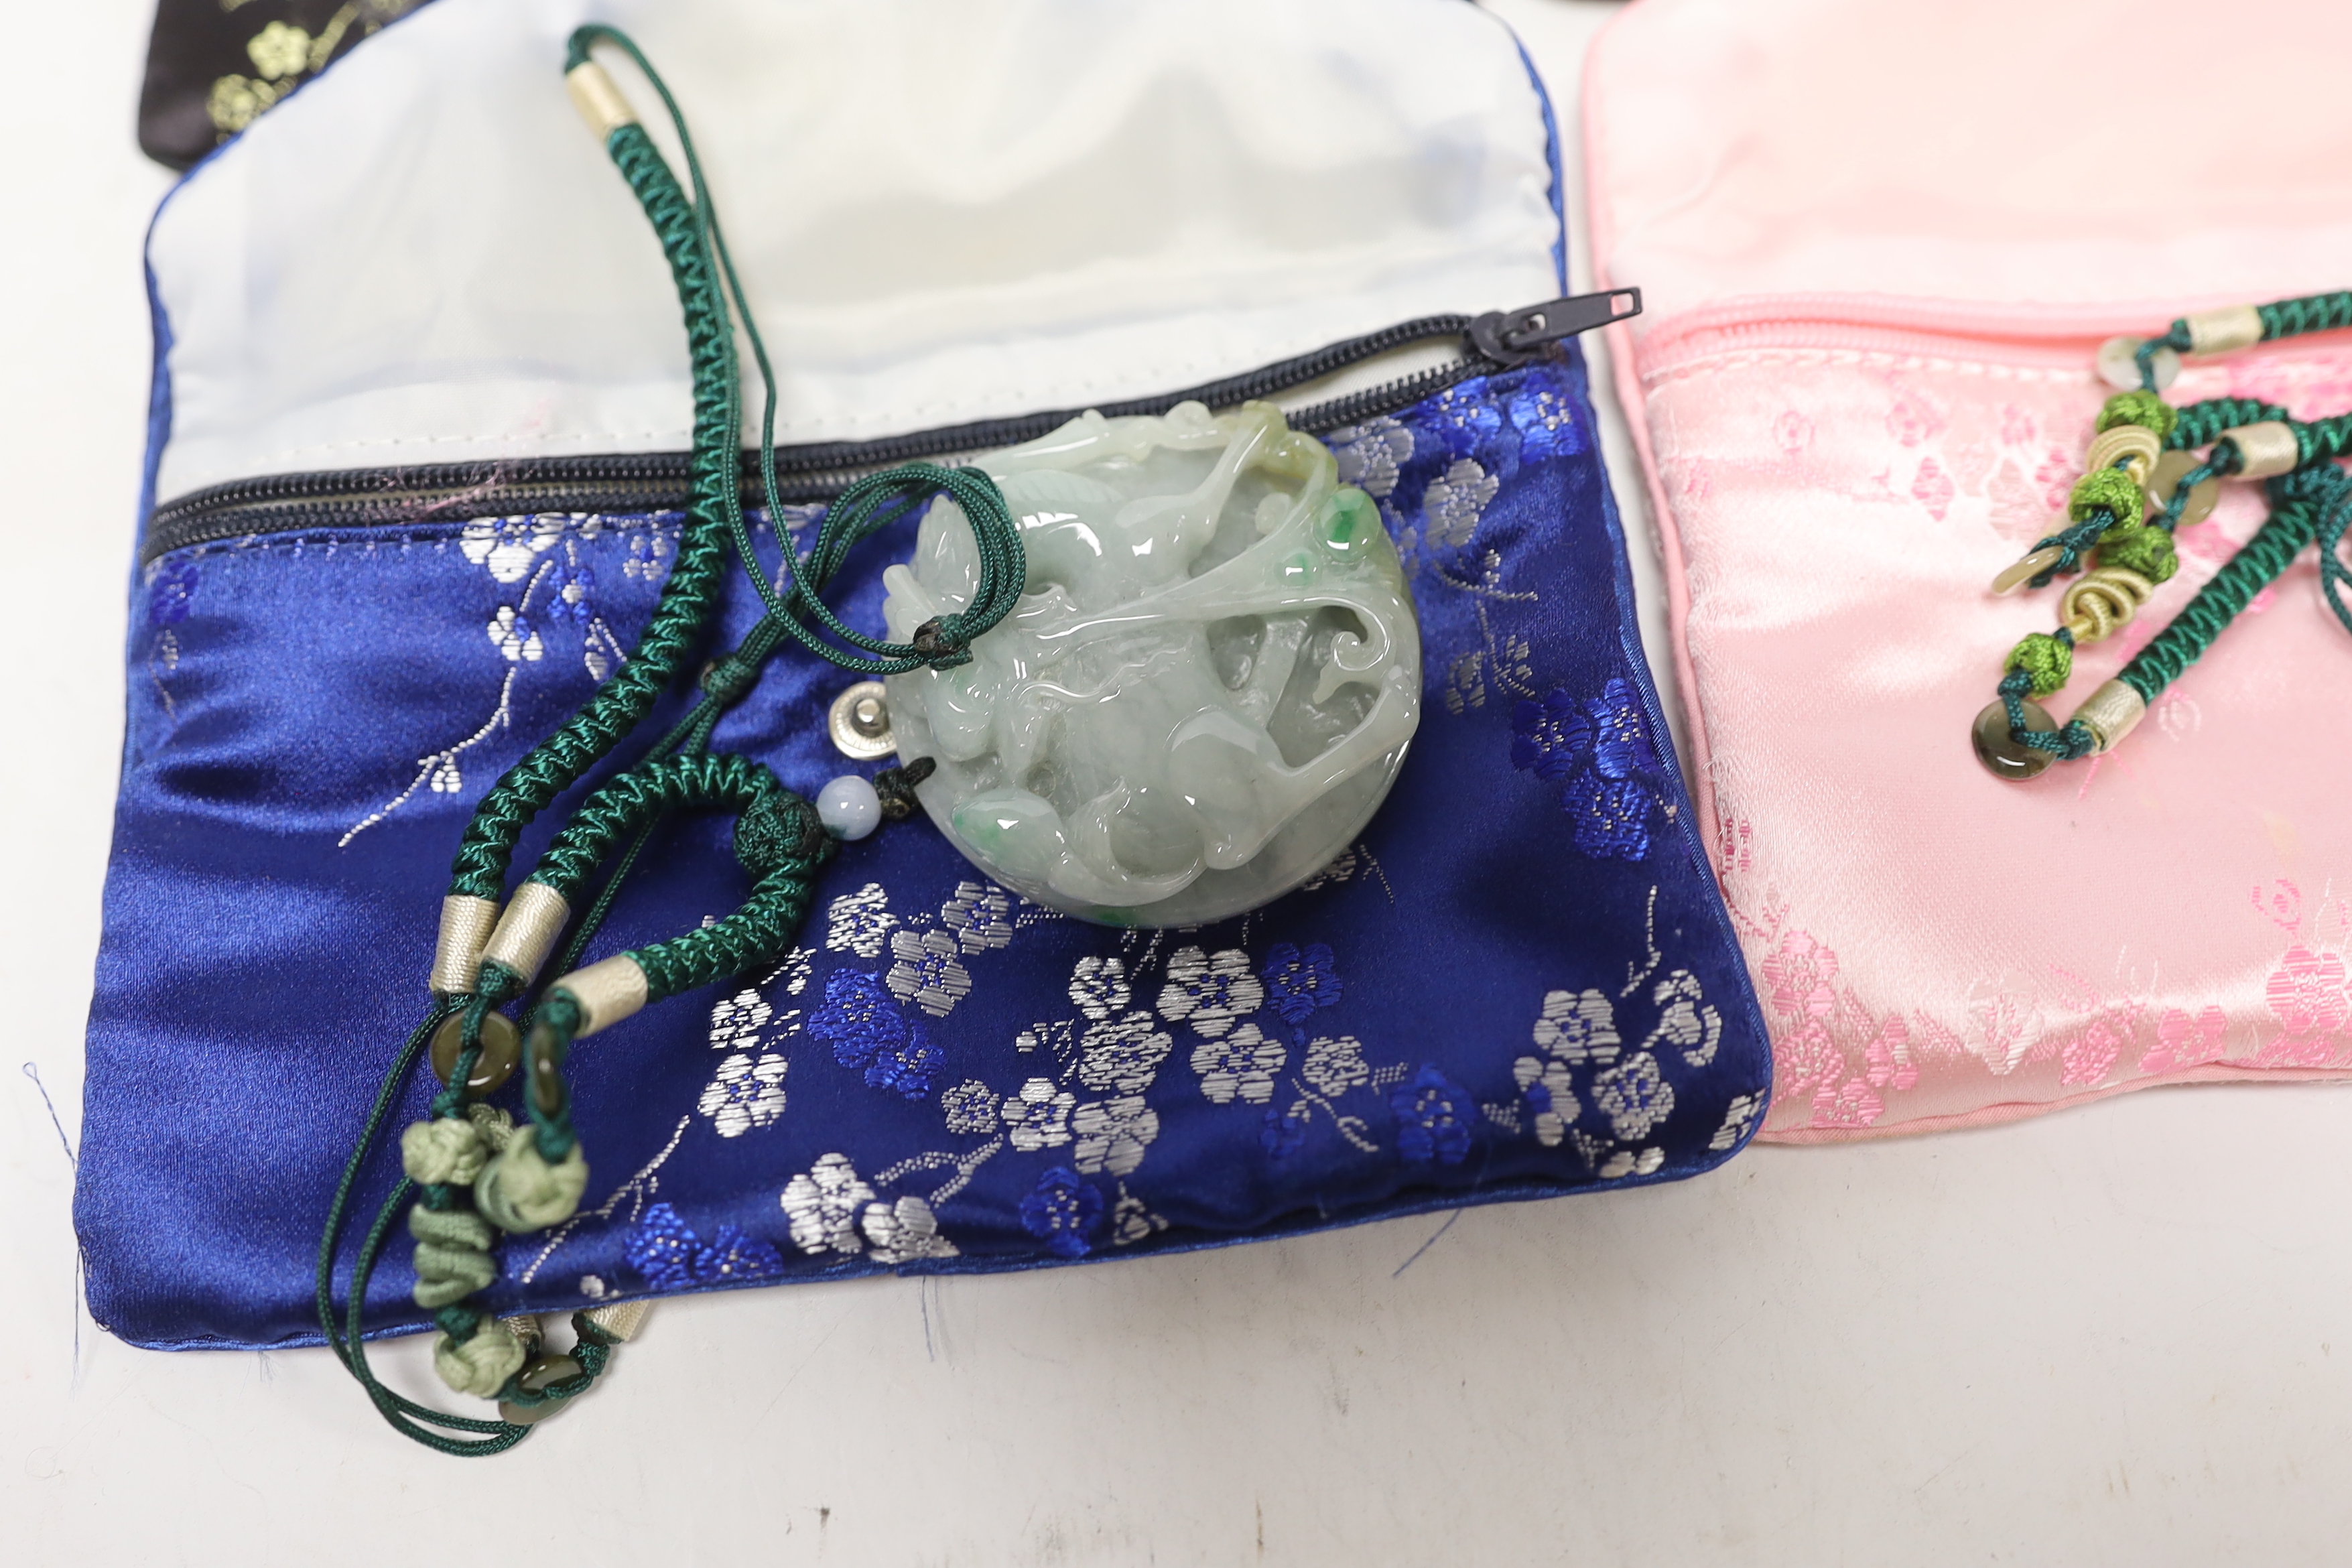 Four Chinese jadeite pendants